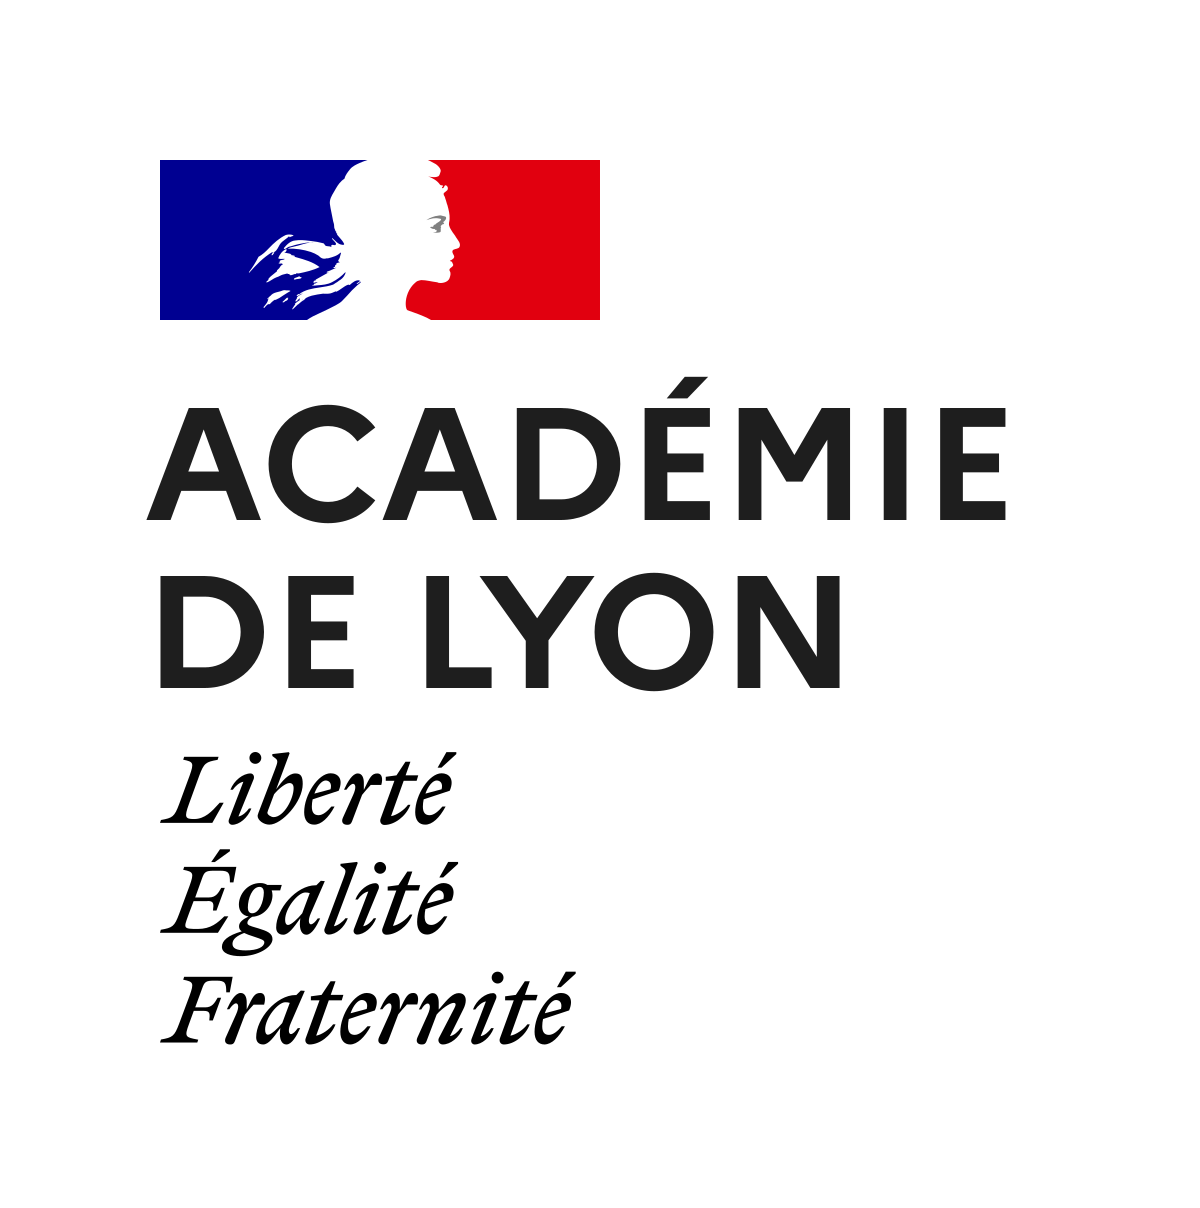 Academie de Lyon